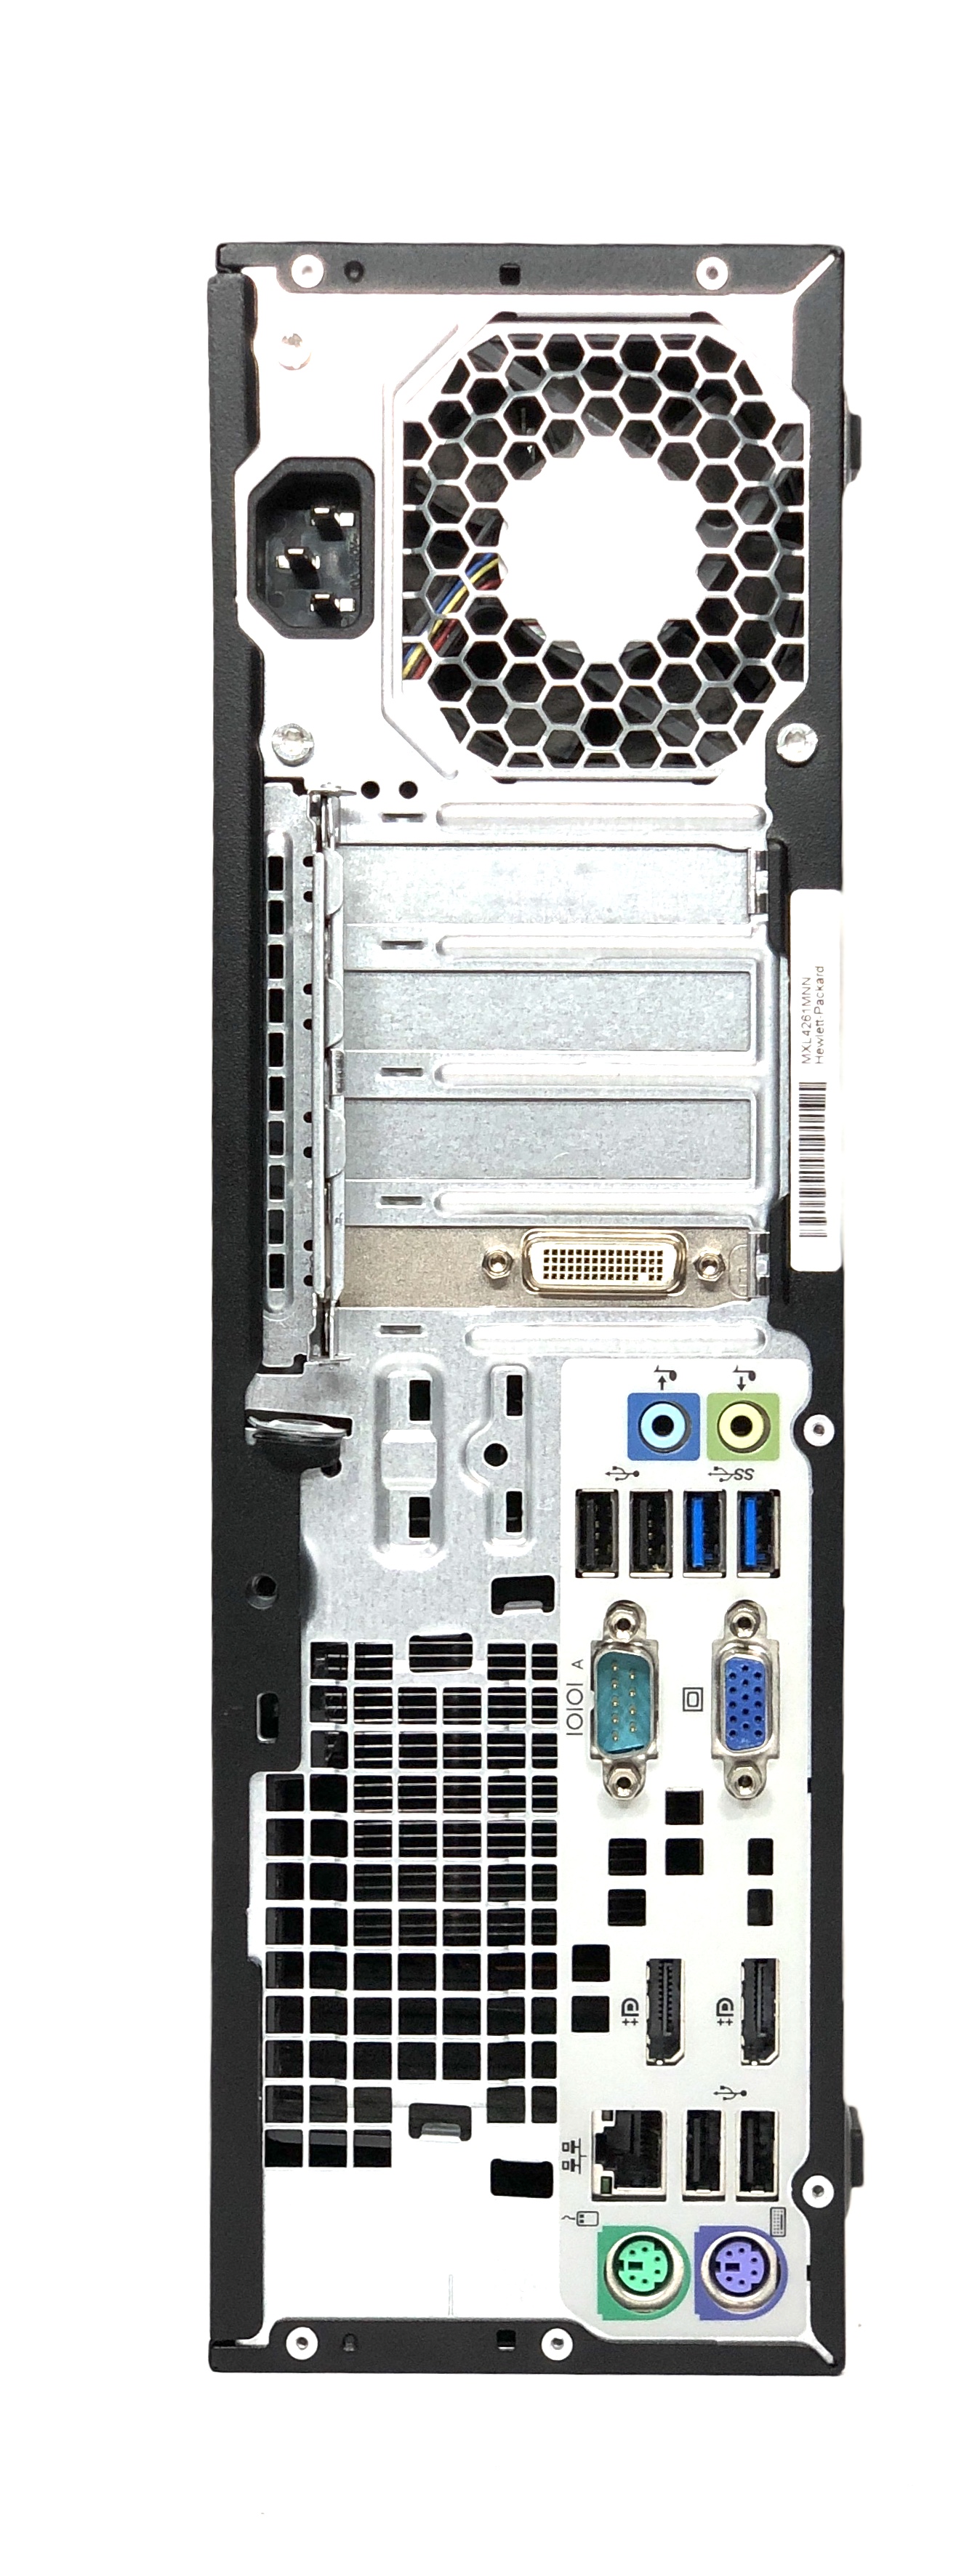 HP ProDesk 600 G1 Desktop SFF, Intel Core i5-4590 3.3GHz, 8GB DDR3 Ram, 500GB HDD, Windows 10 Pro - image 4 of 5